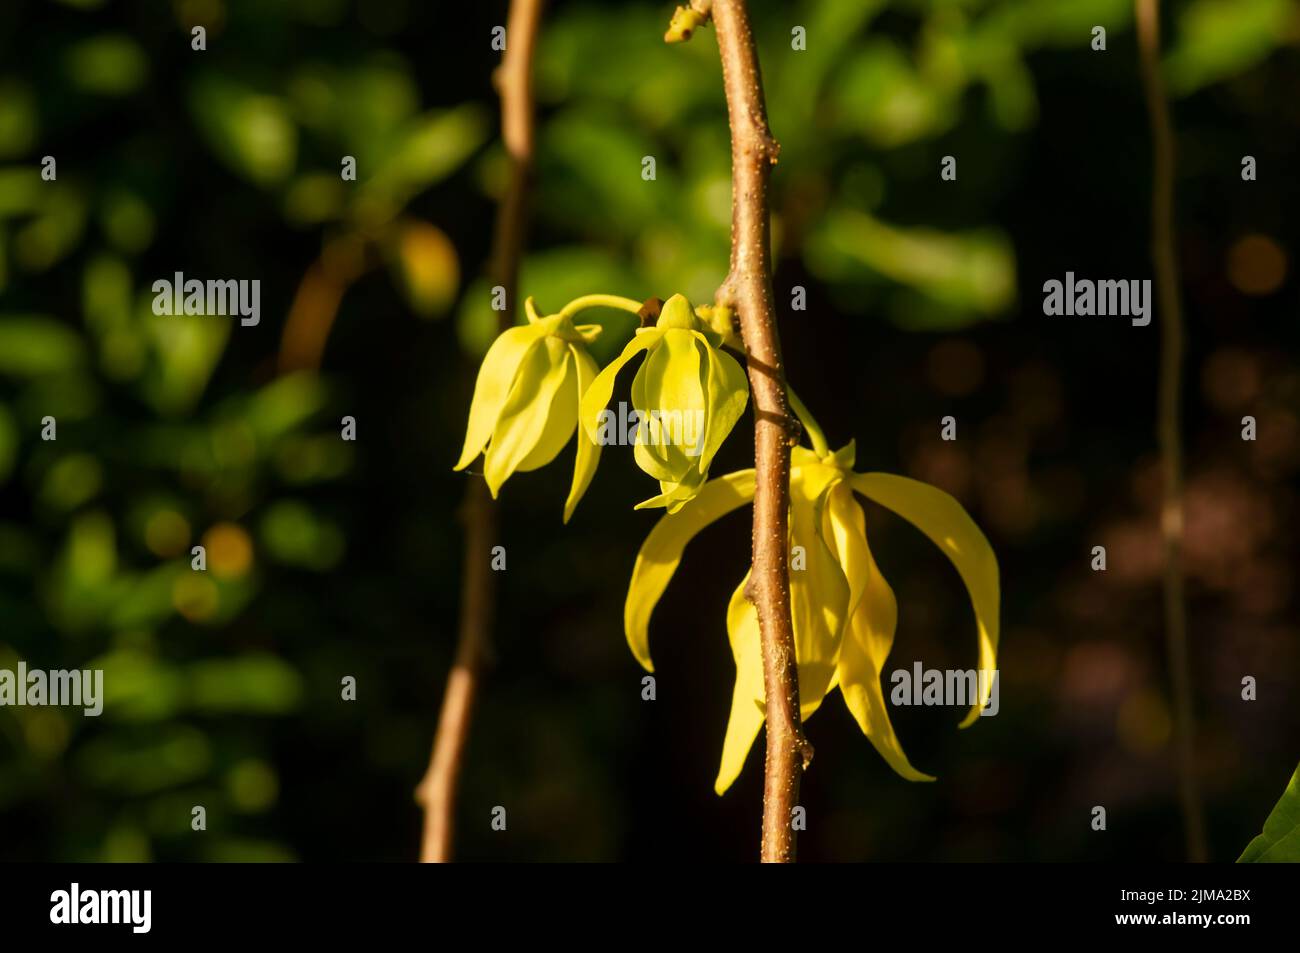 A cananga odorata flower, known as the cananga, selected focus Stock Photo